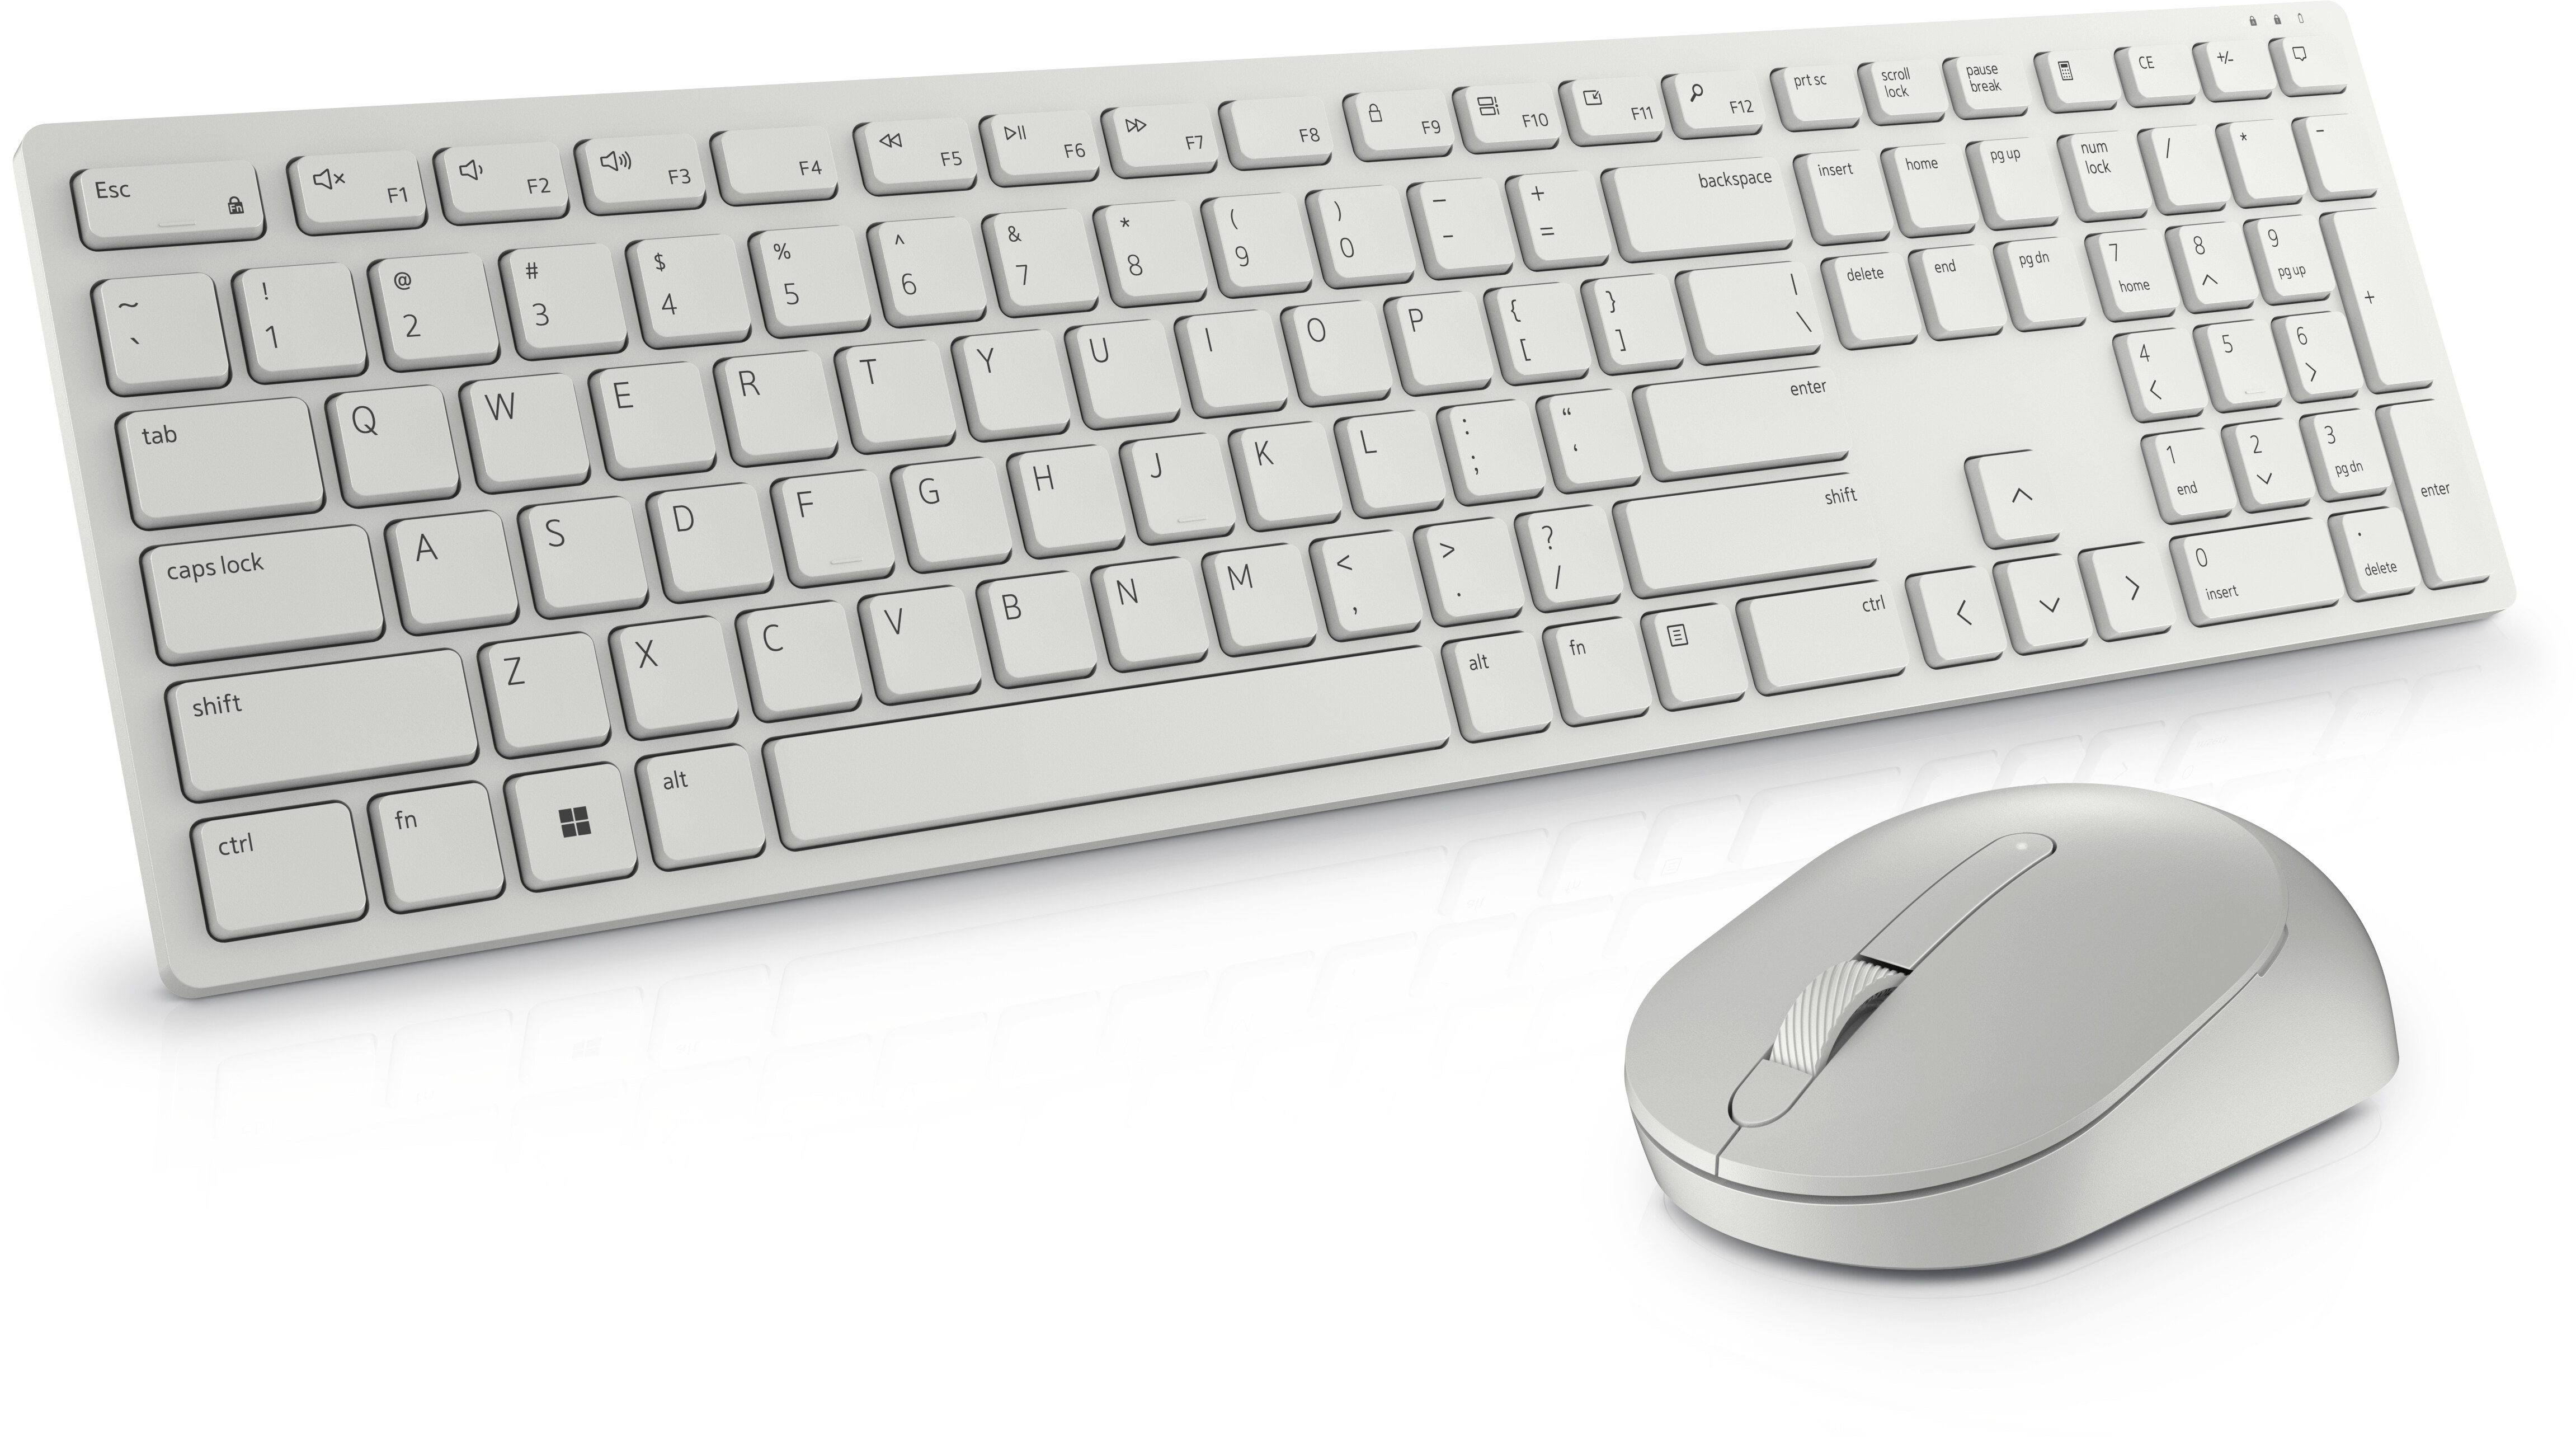 Dell Pro toetsenbord muis – KM5221W – Belgisch (AZERTY) – wit Dell Nederland